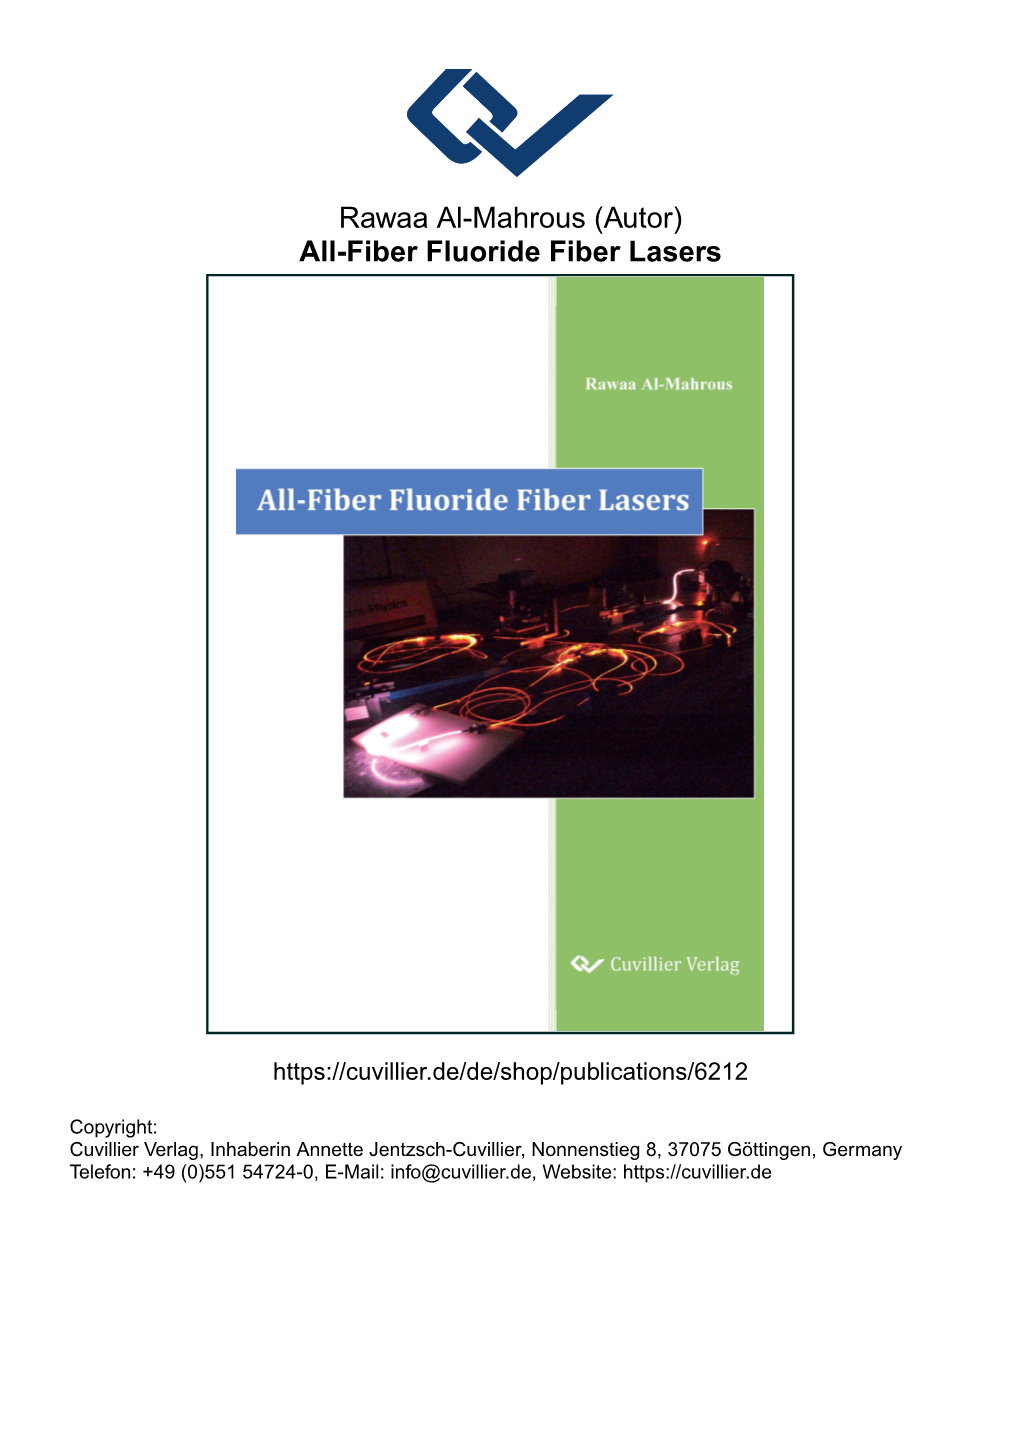 All-Fiber Fluoride Fiber Lasers